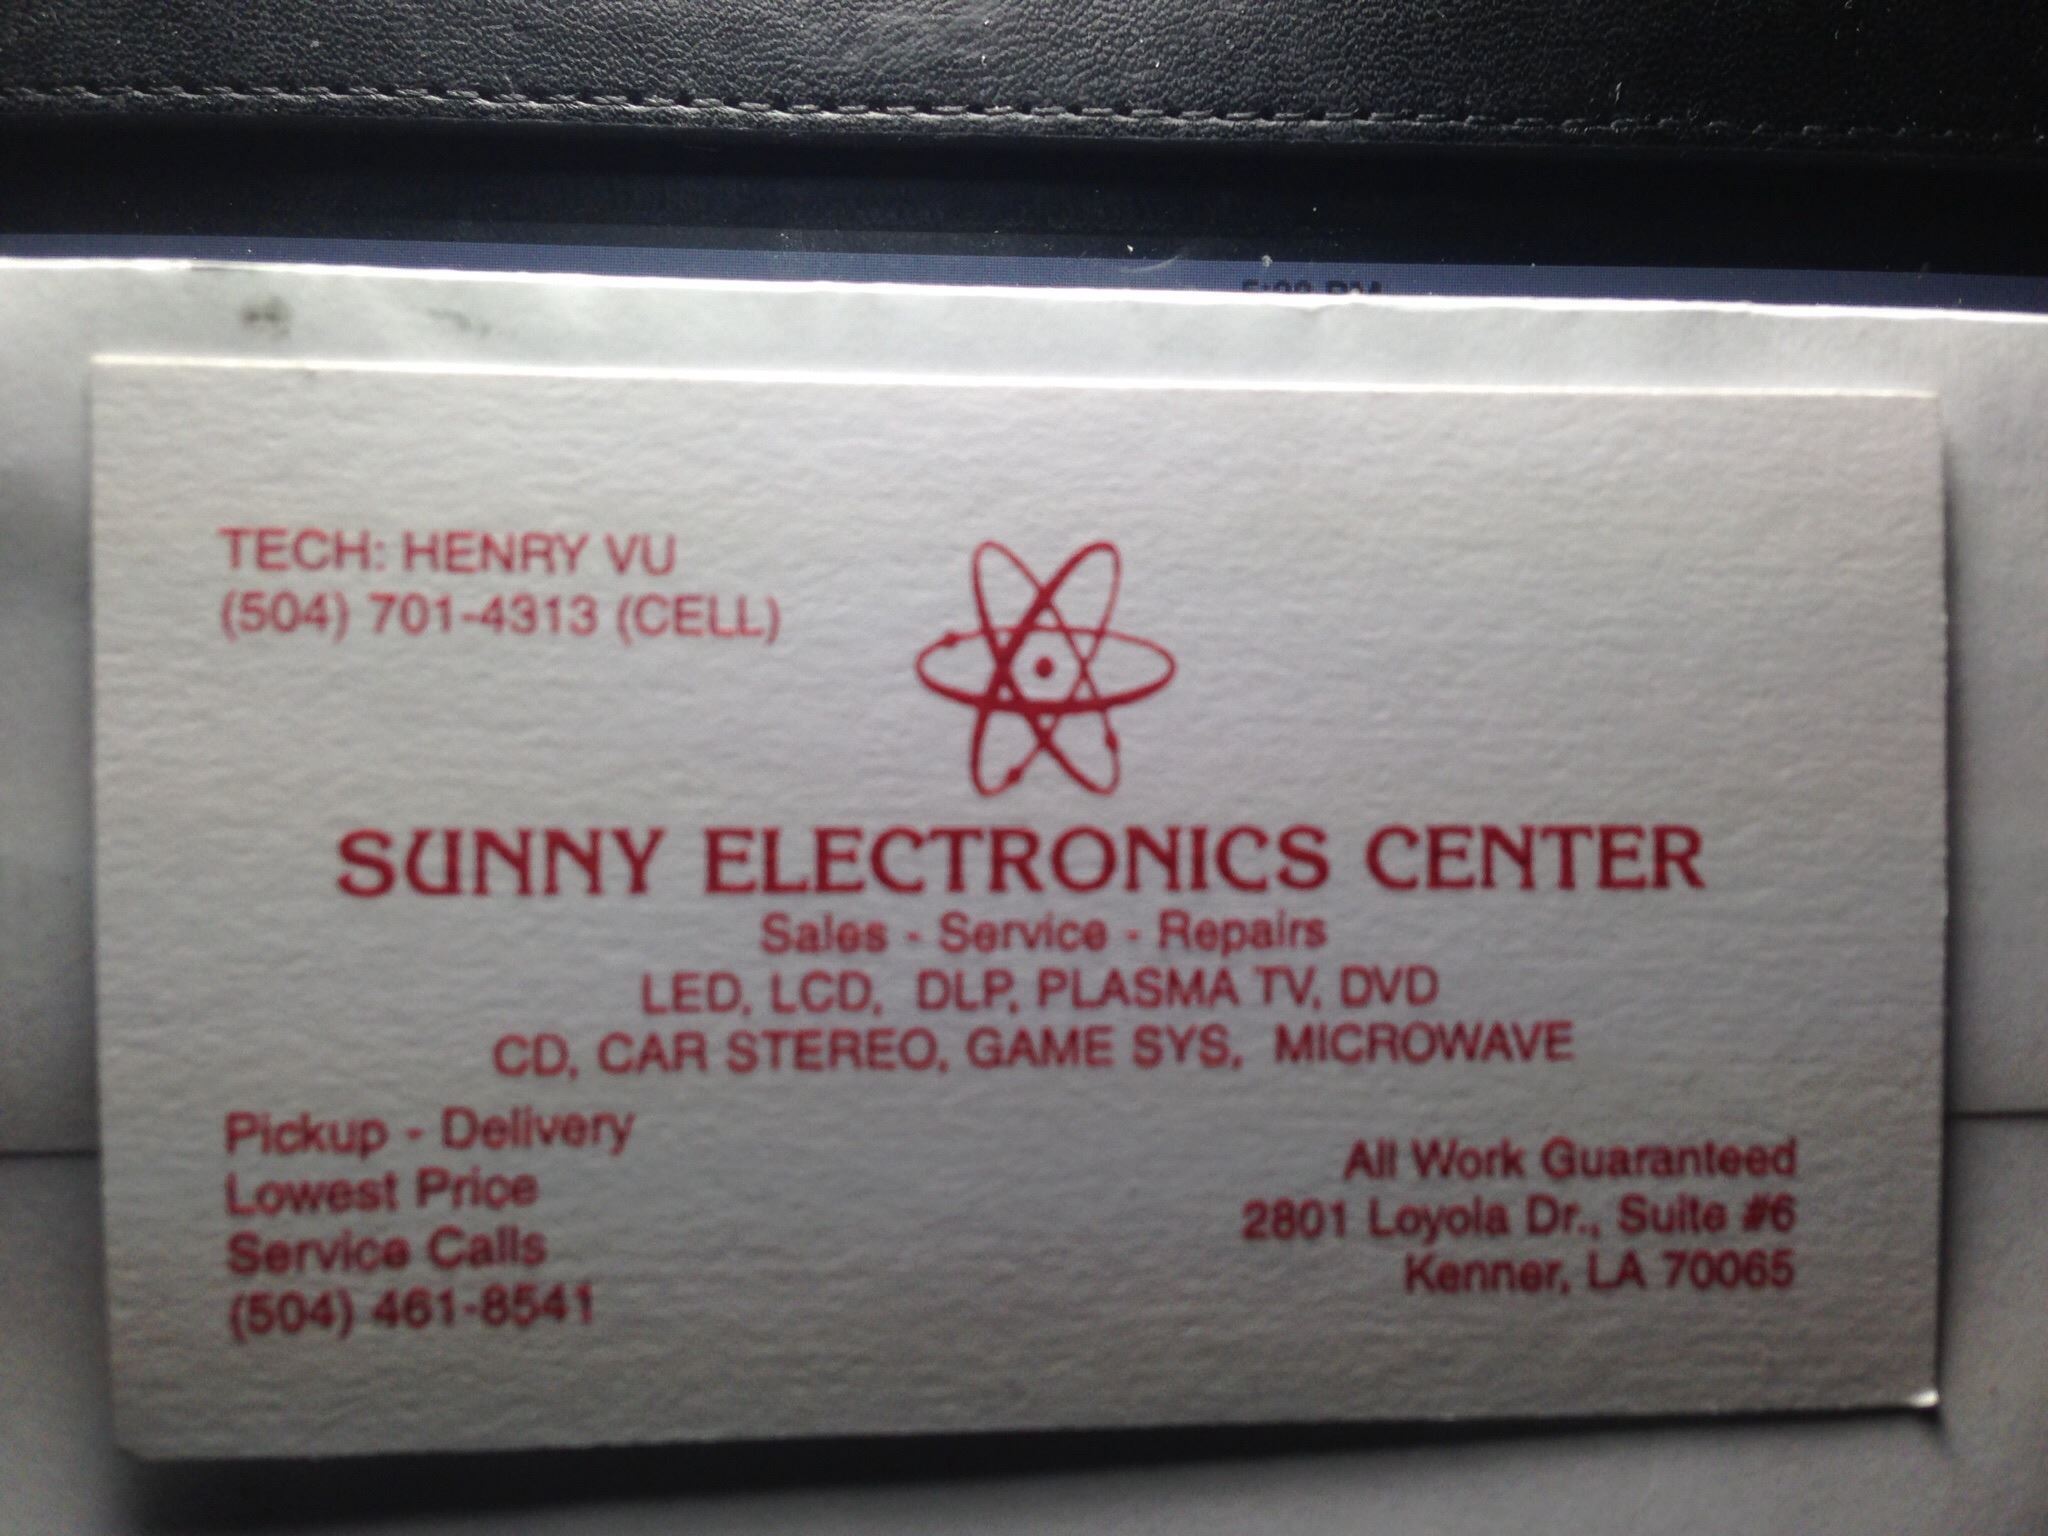 Sunny Electronics Center